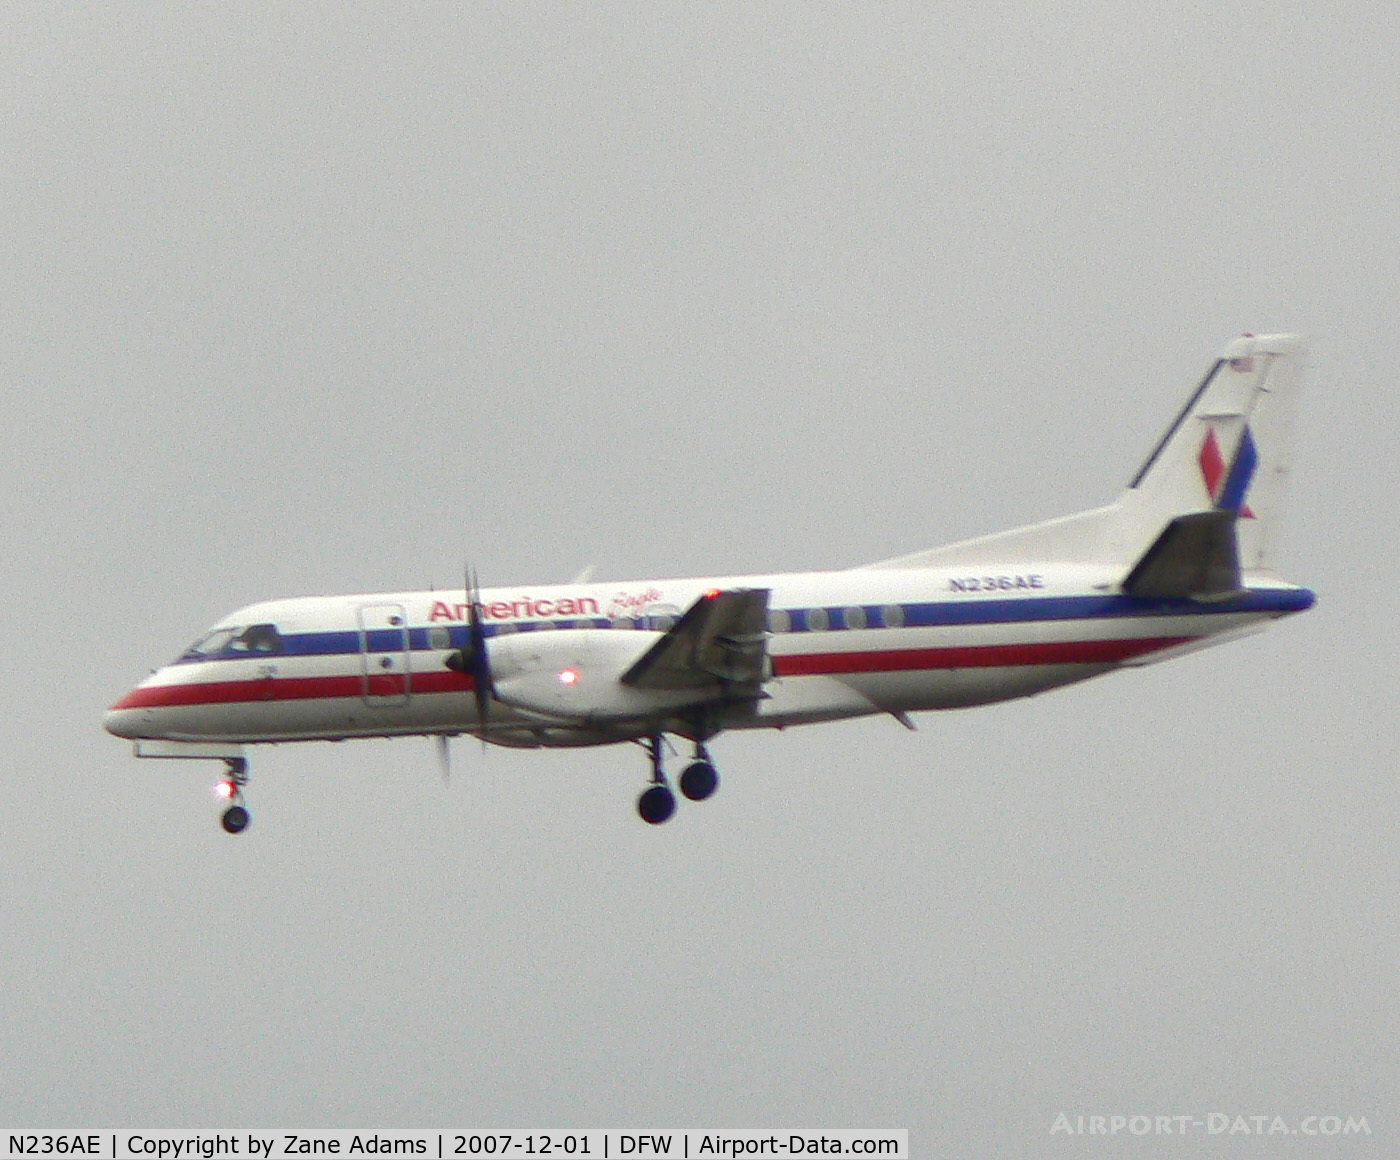 N236AE, 1991 Saab 340B C/N 340B-236, Rainy day at DFW - Landing 18R